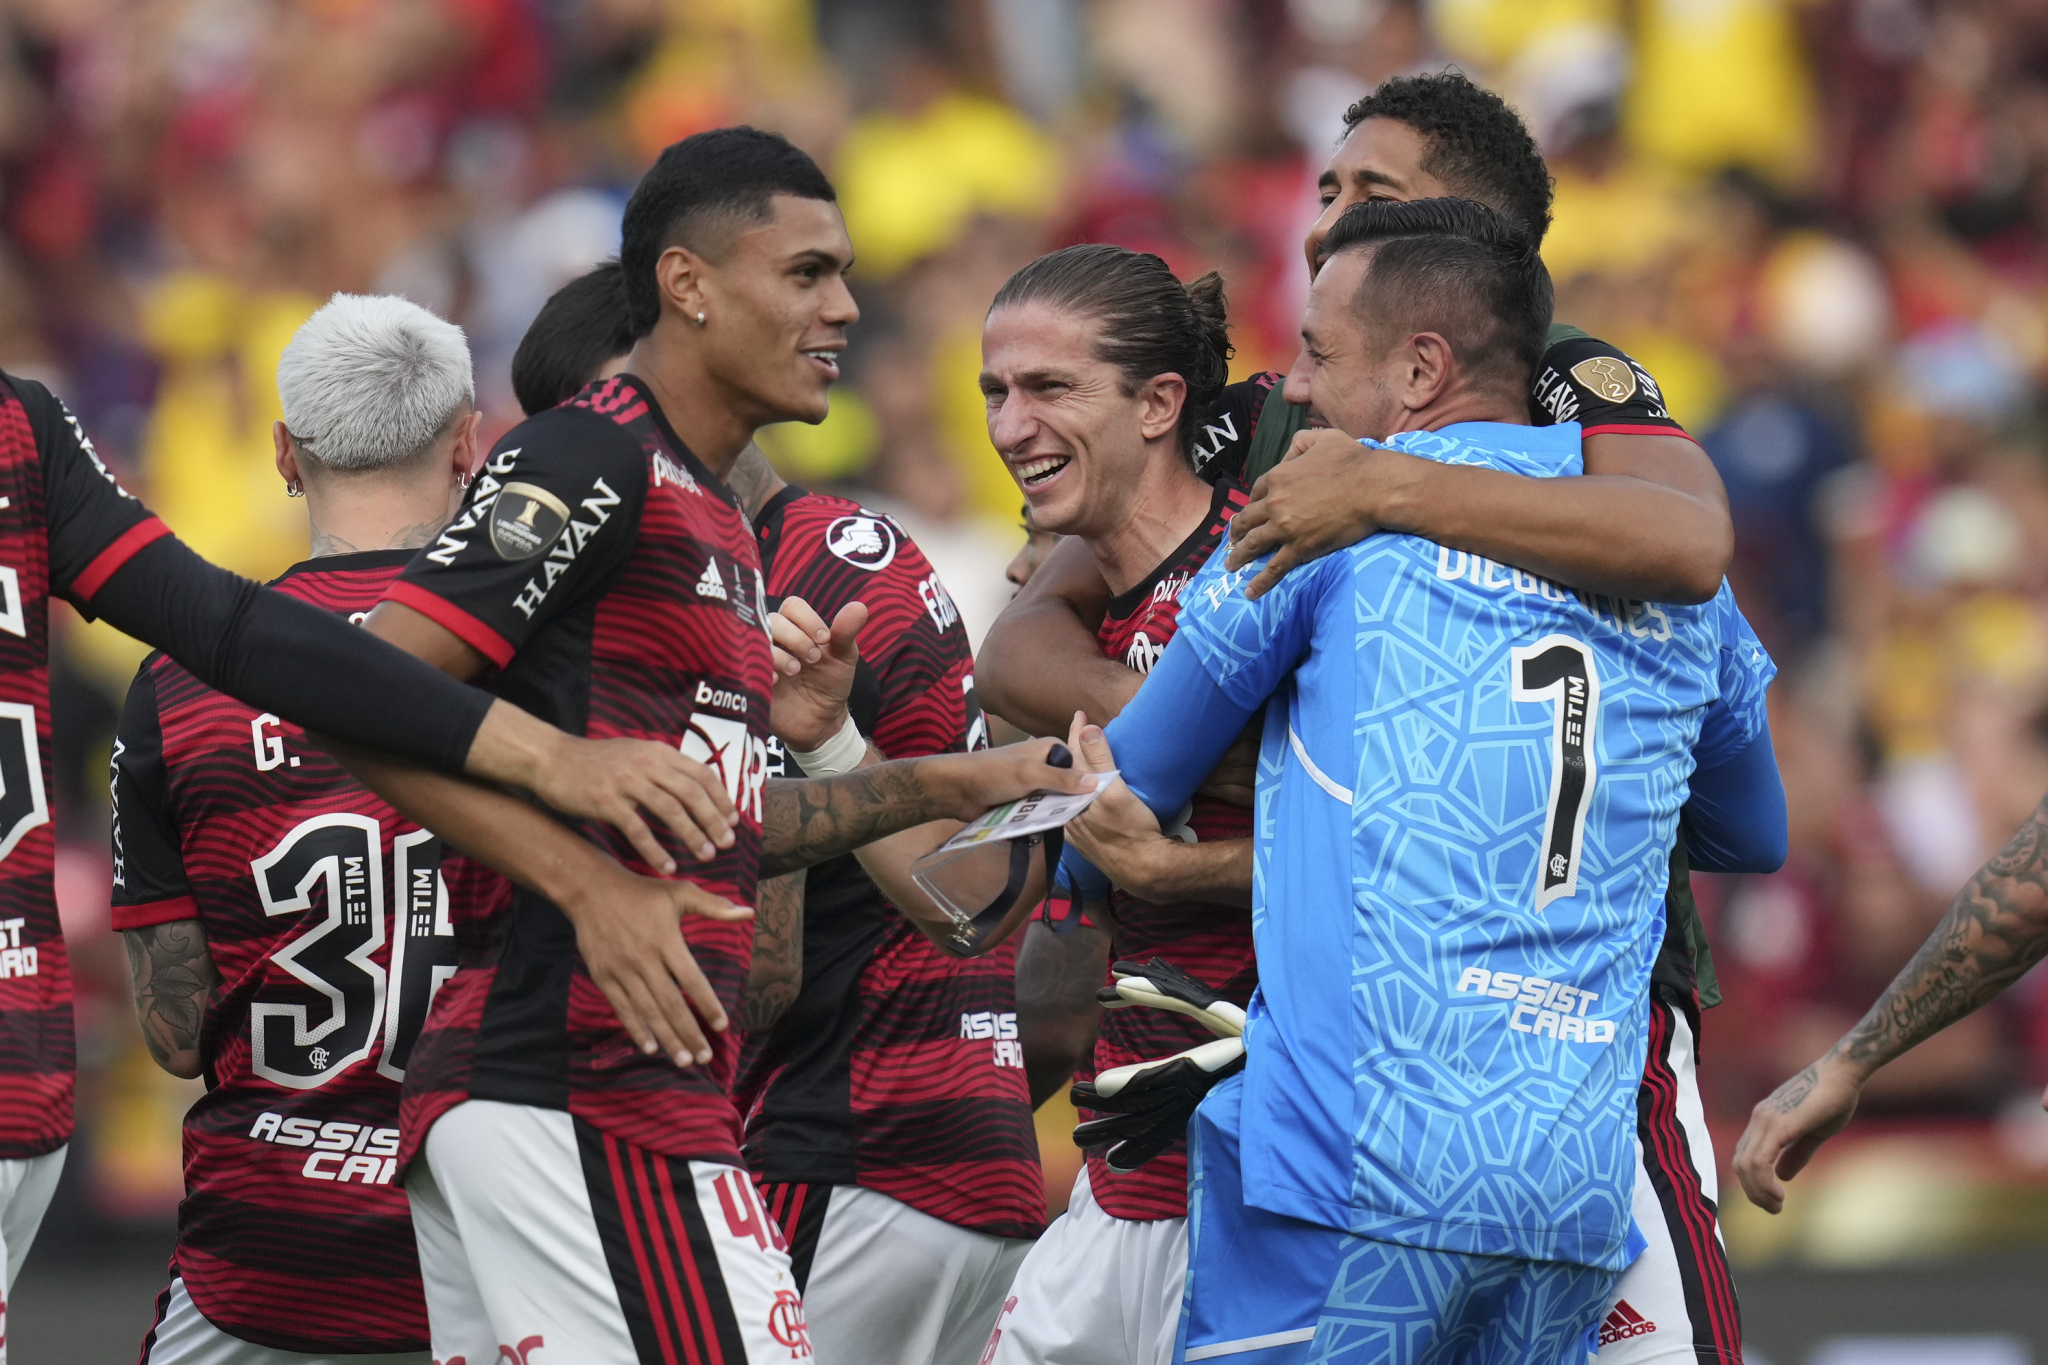 TROFEJ SE VRAĆA U RIO Flamengo je ponovo vladar Južne Amerike, Barbosa srušio Atletiko (VIDEO)